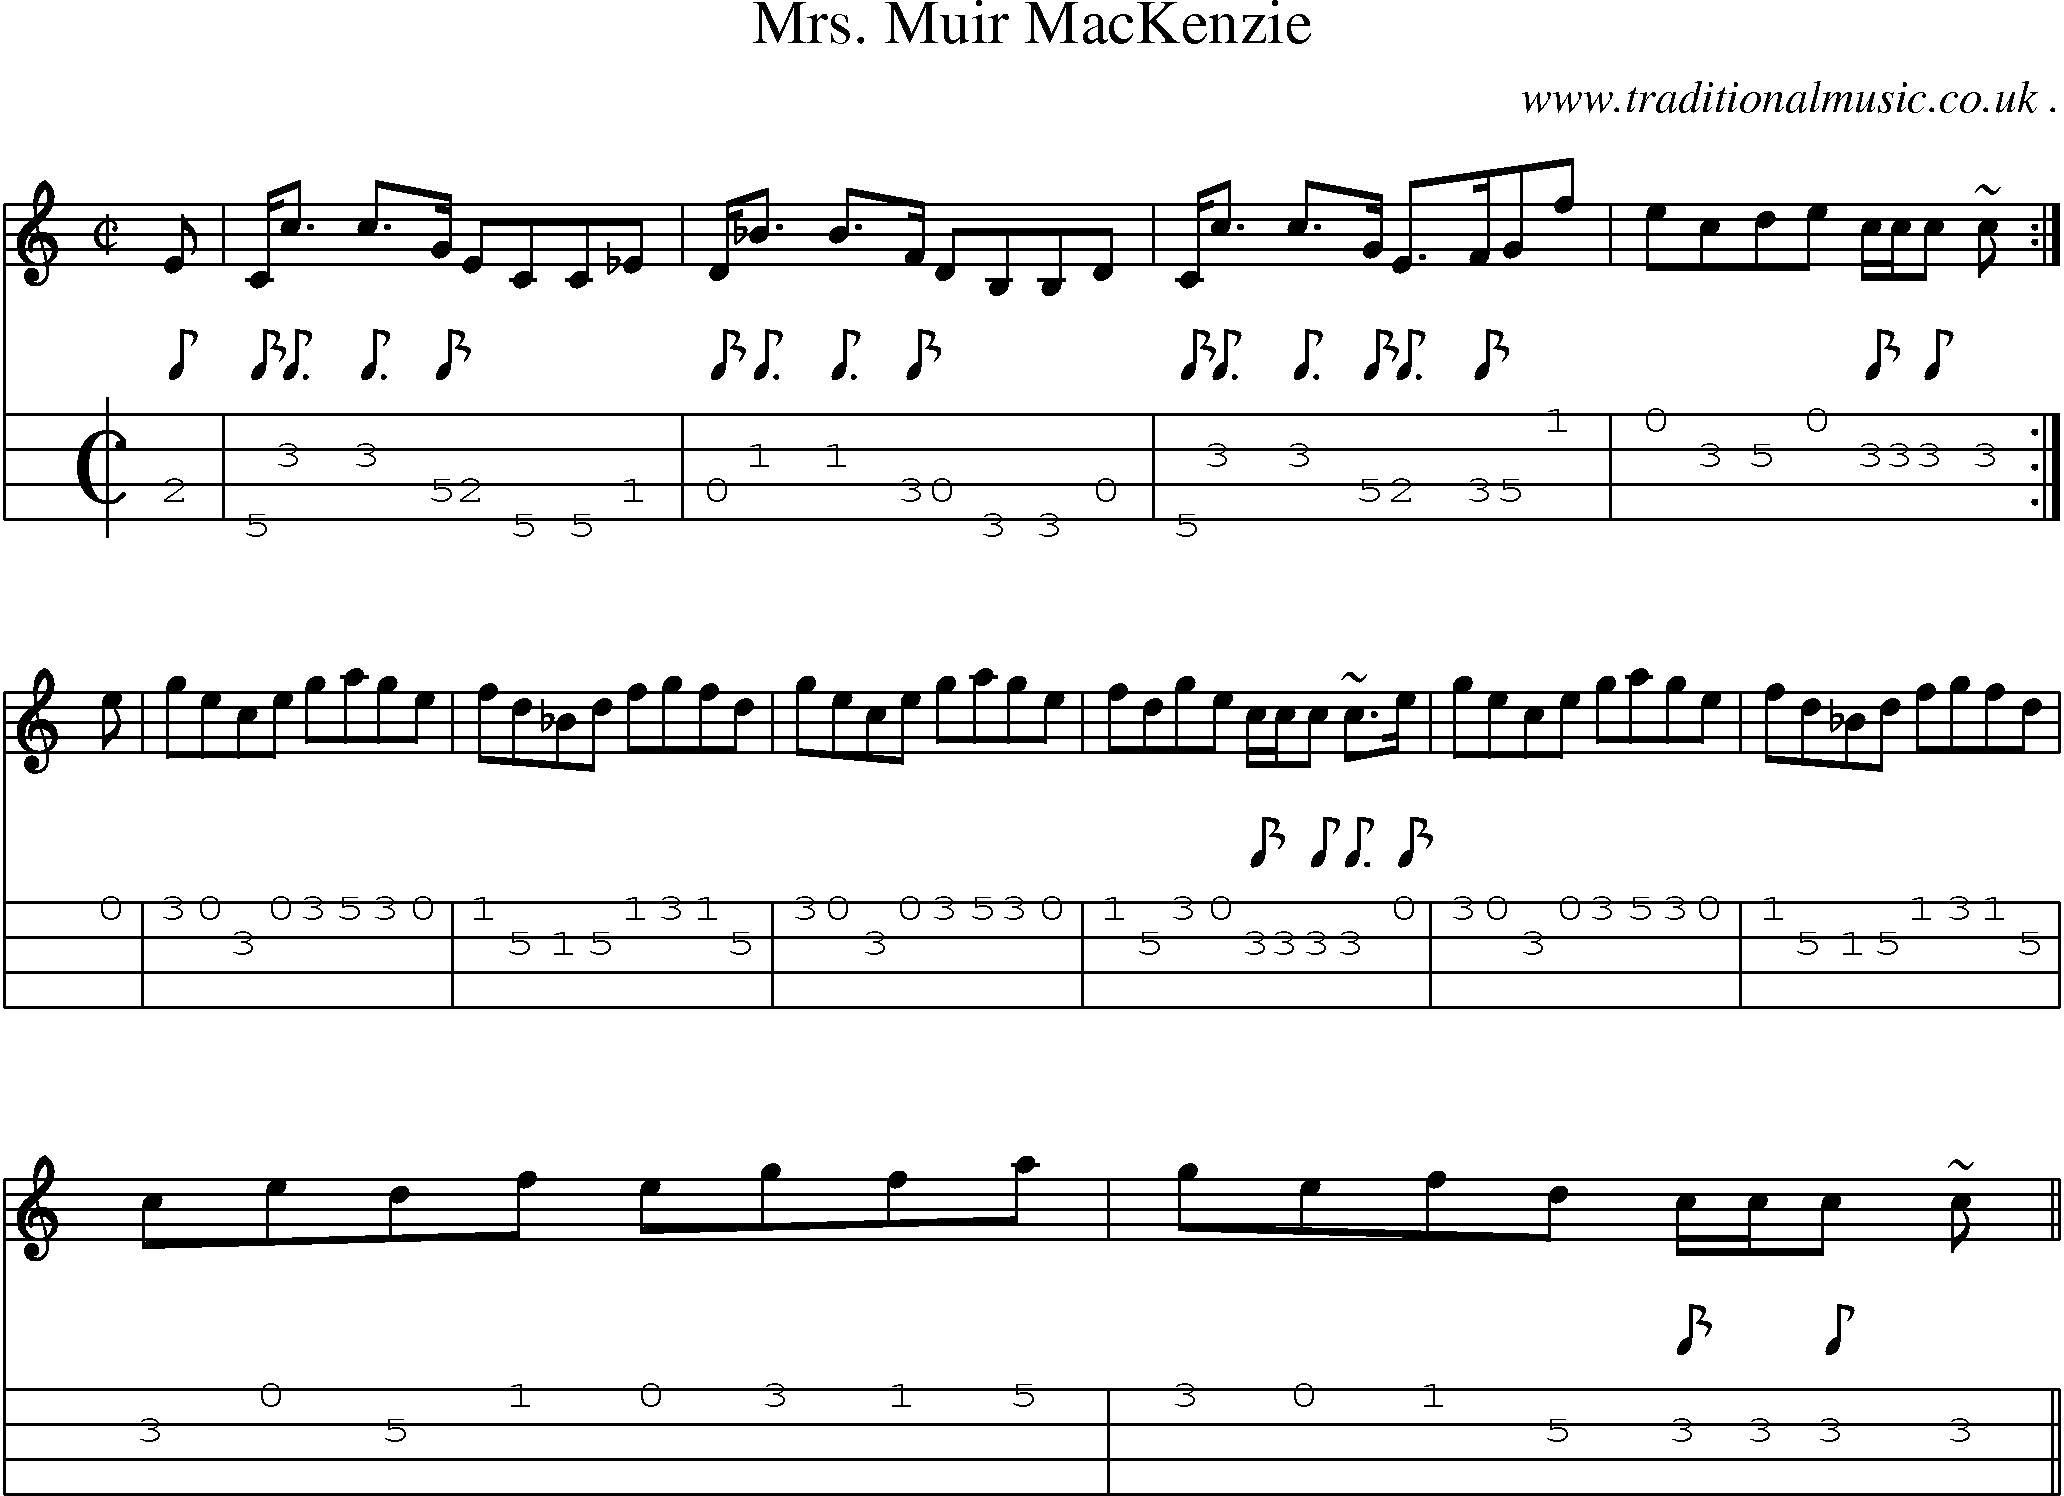 Sheet-music  score, Chords and Mandolin Tabs for Mrs Muir Mackenzie